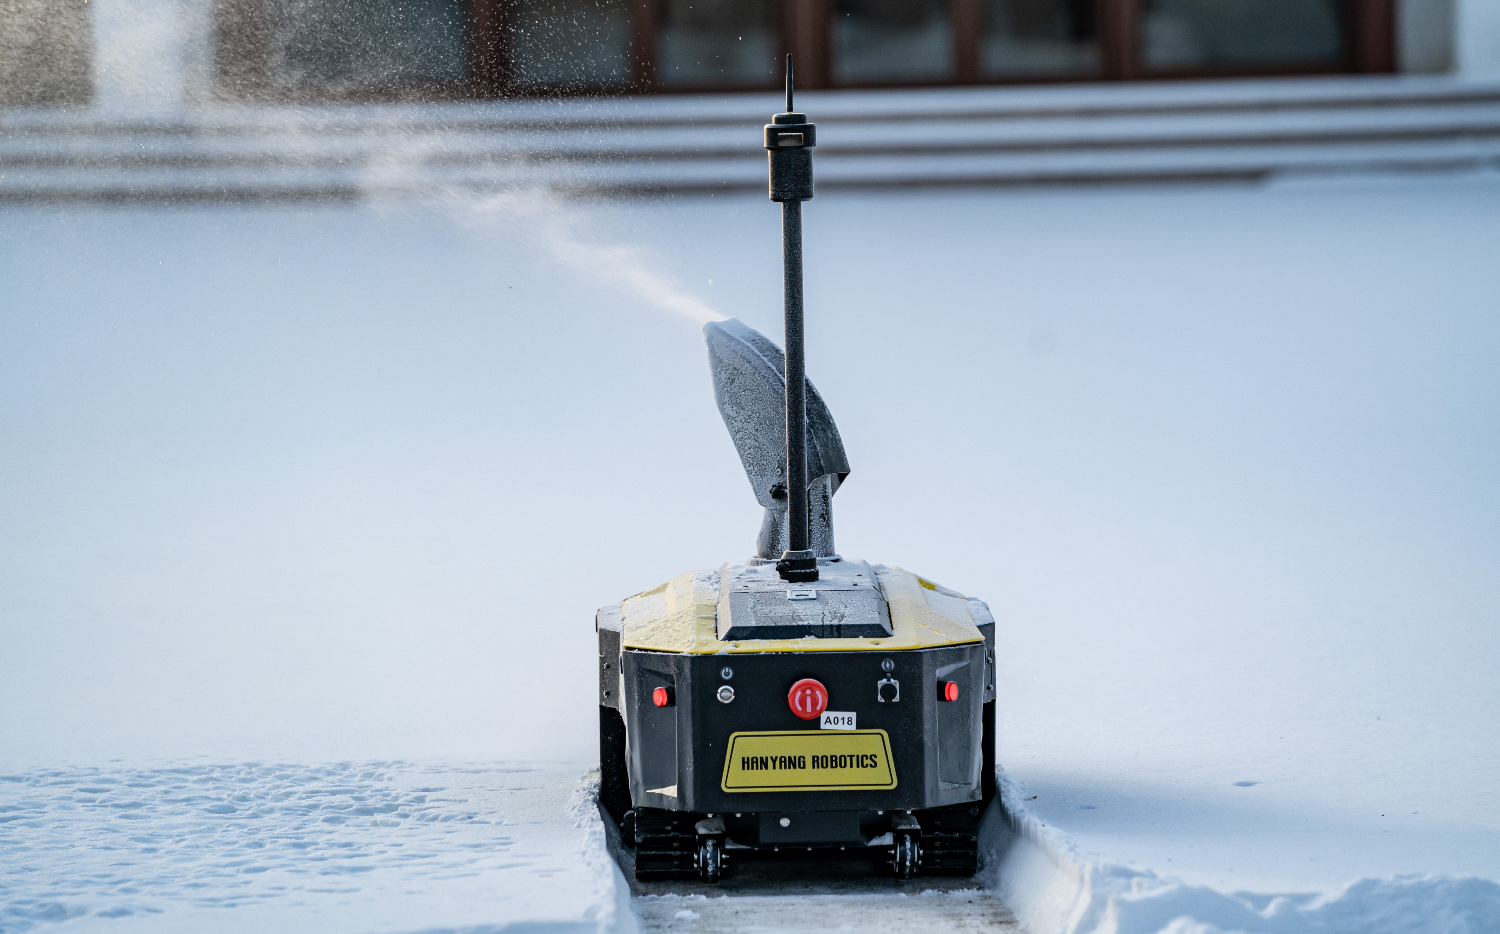 Snowbot - Autonomous Snow Blower Robot for Residential Use